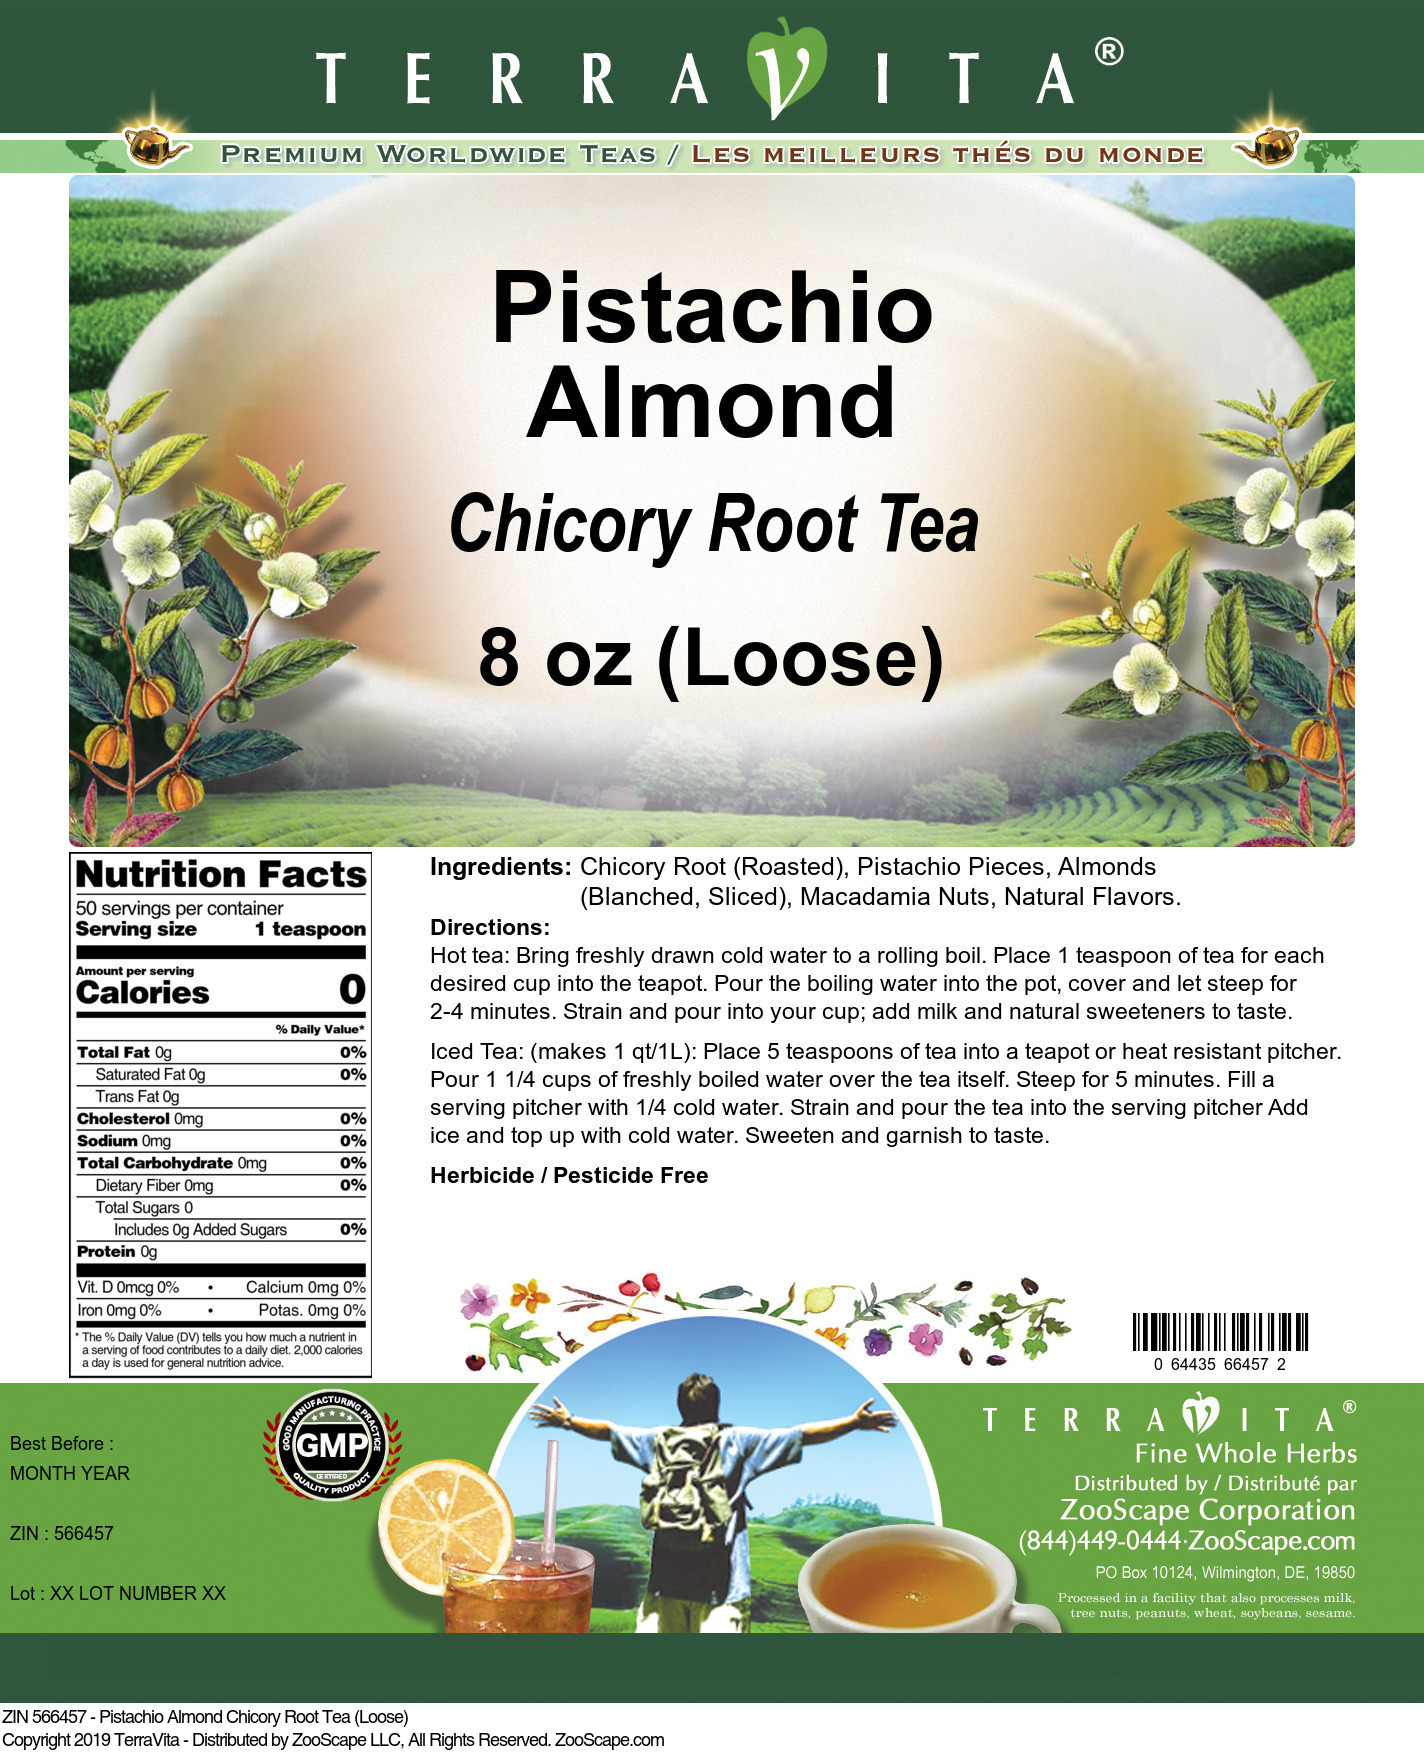 Pistachio Almond Chicory Root Tea (Loose) - Label